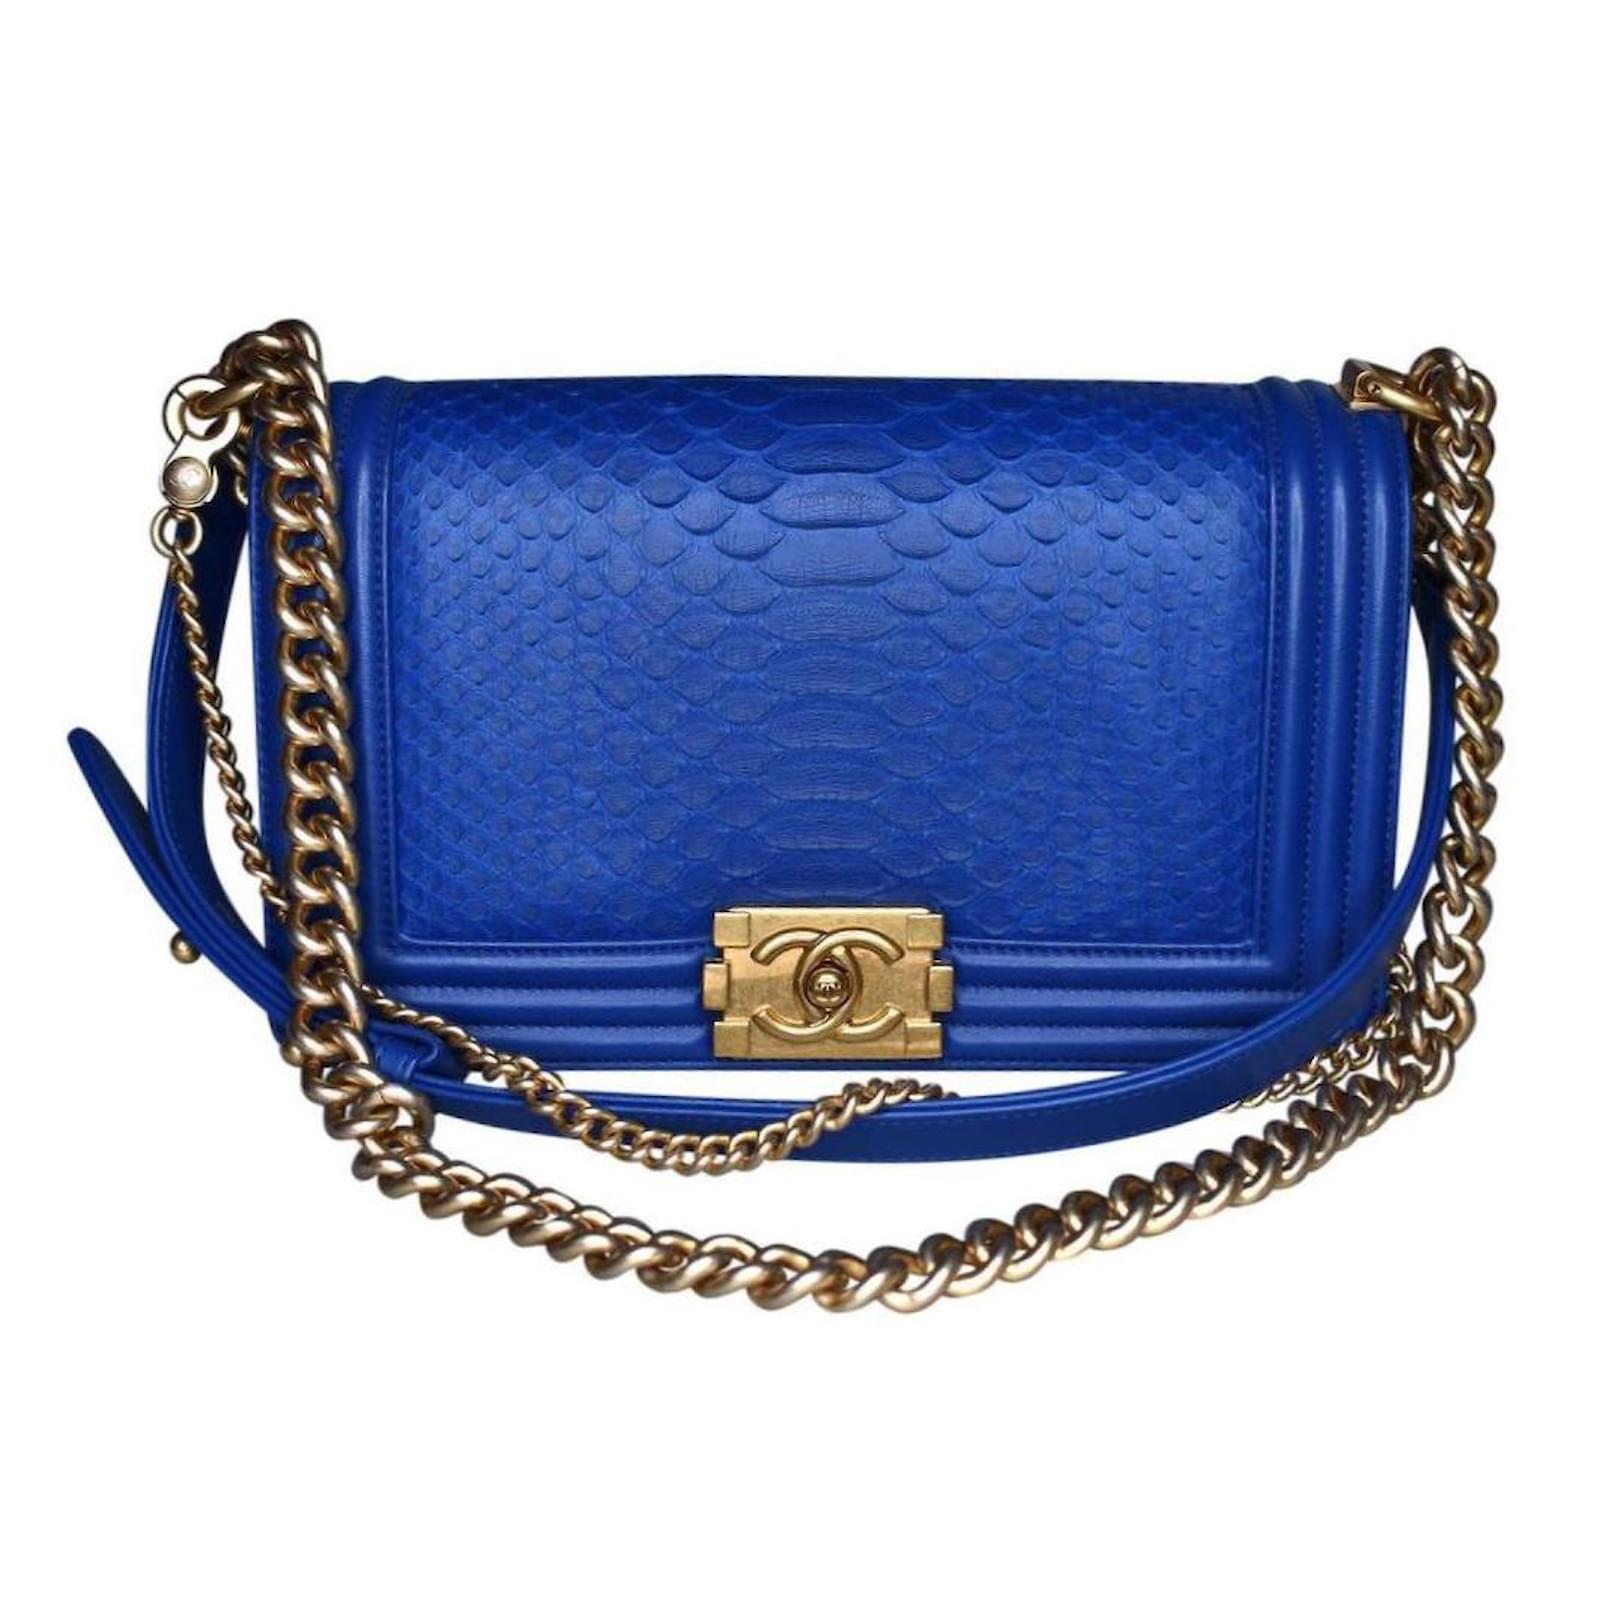 Chanel Rare Limited Edition Boy Medium Python Flap Bag Blue